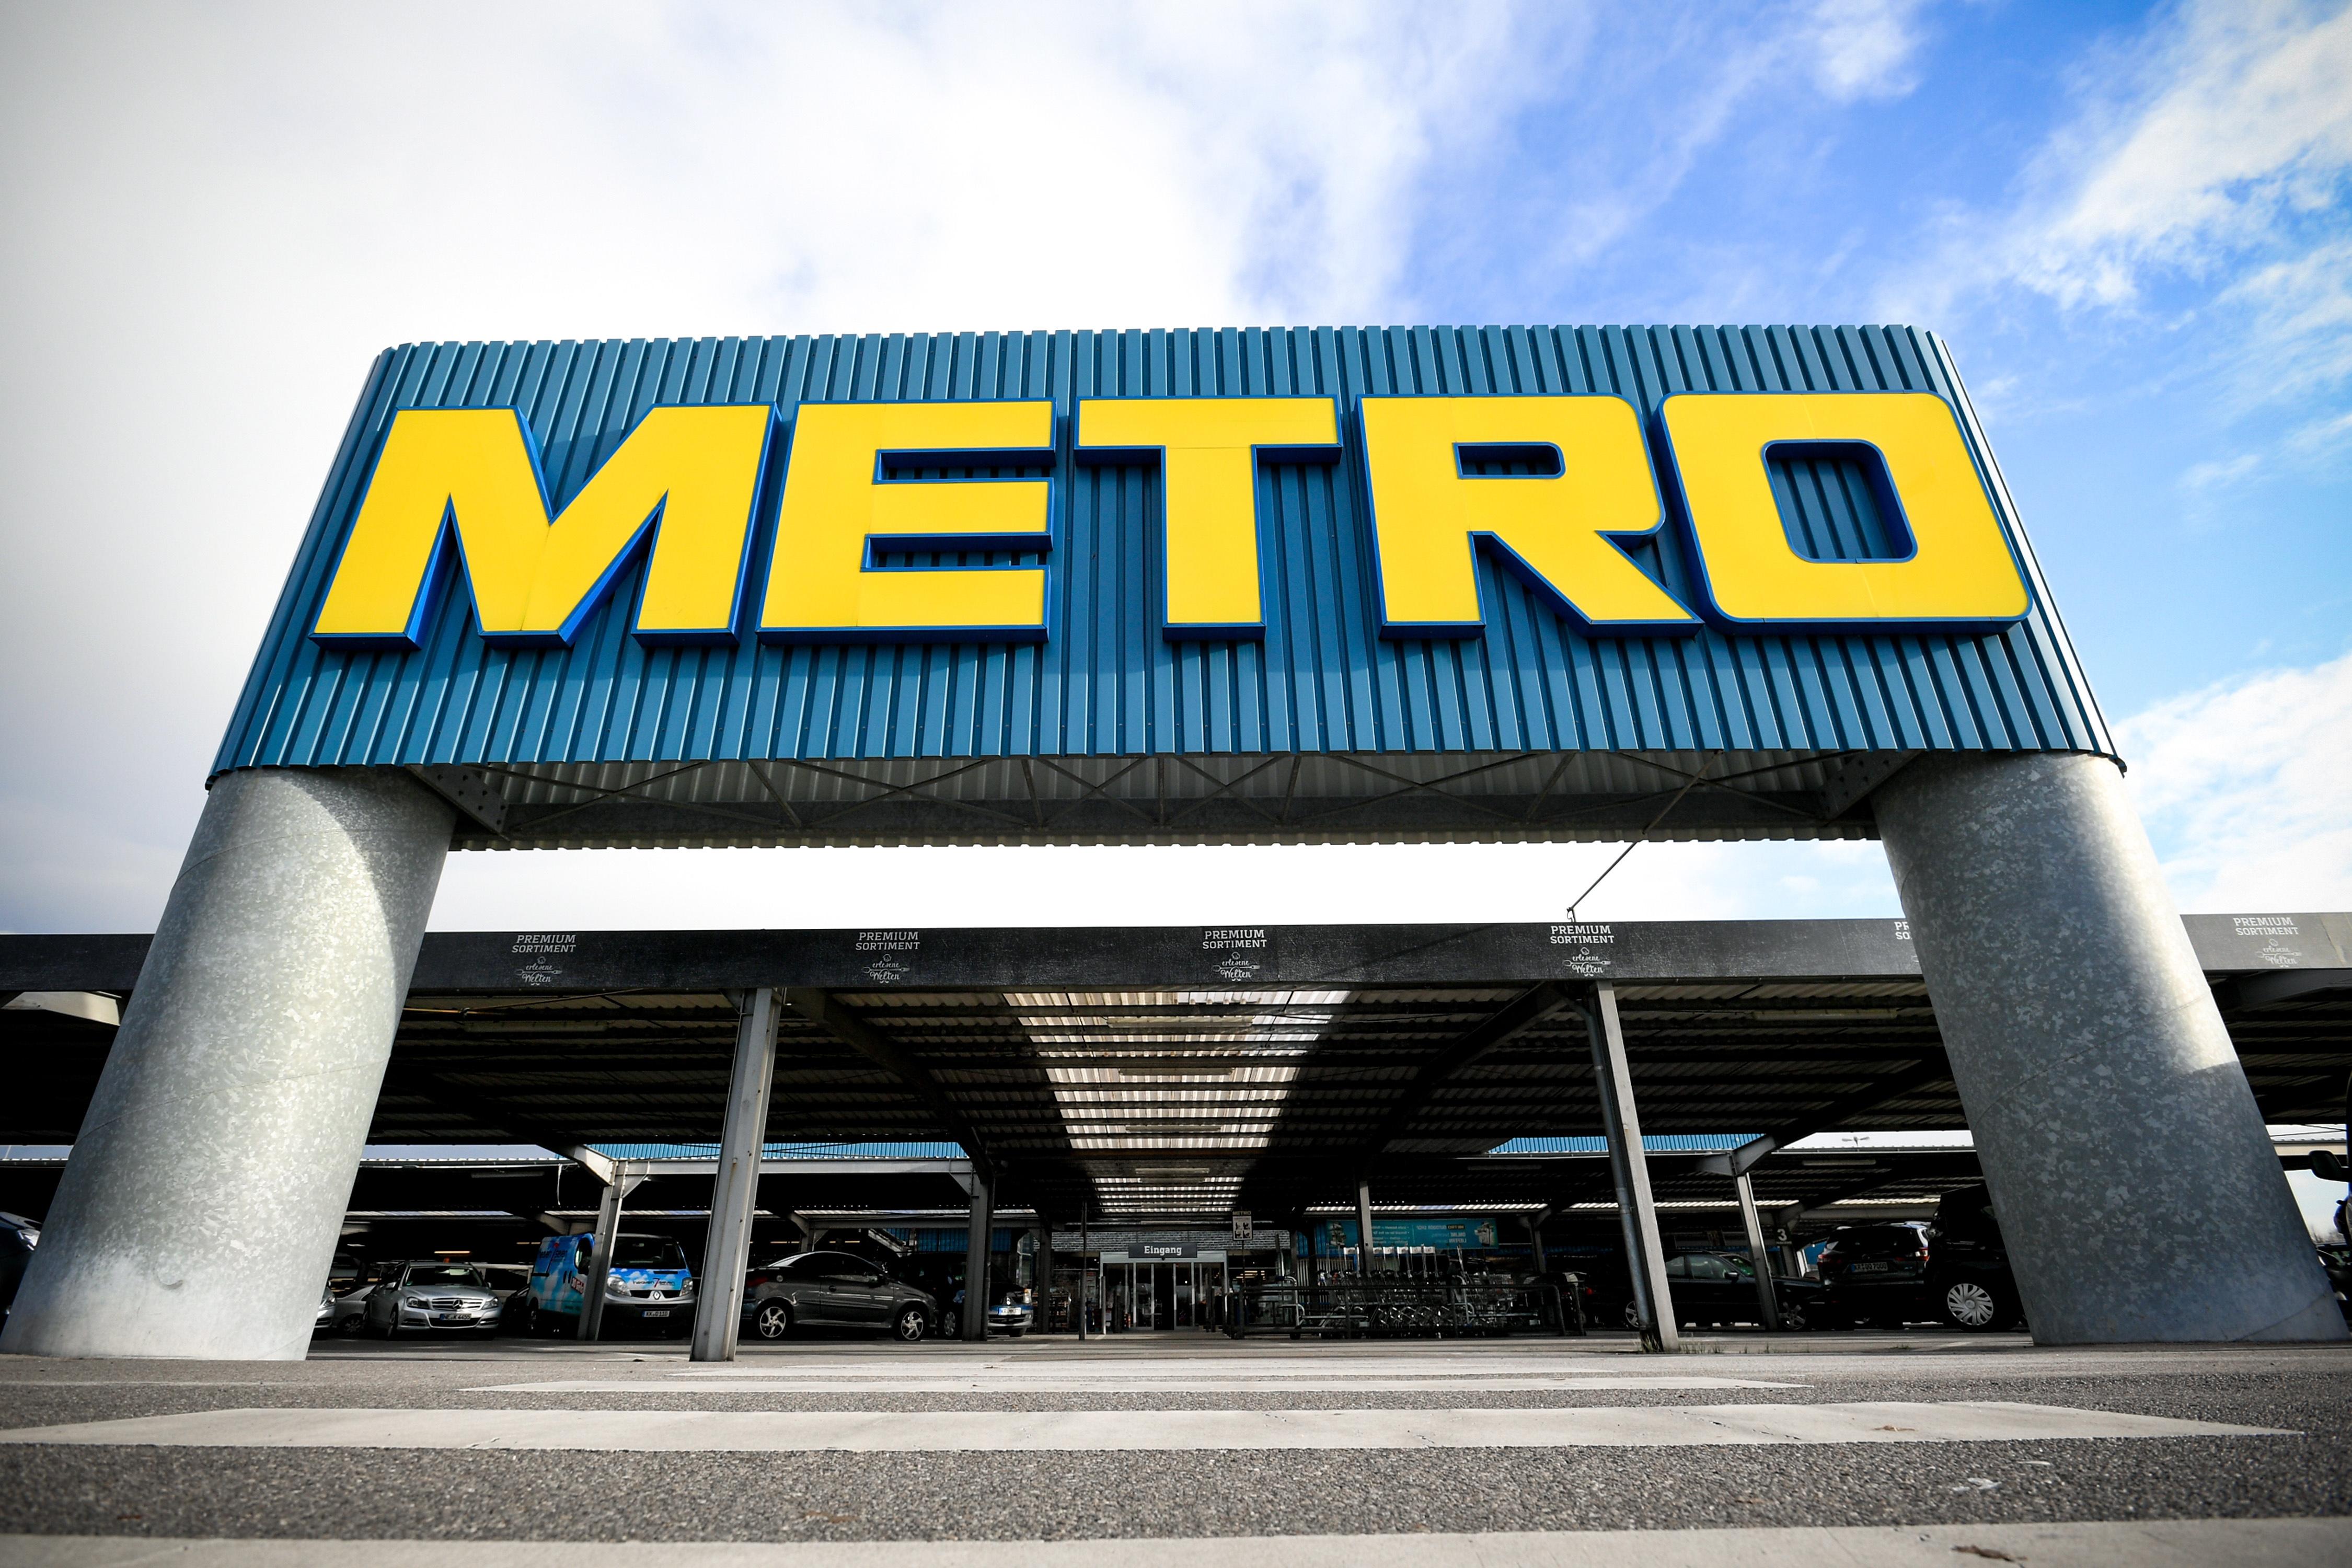 Metro zahlt in der Corona-Krise trotz Rückgängen Dividende